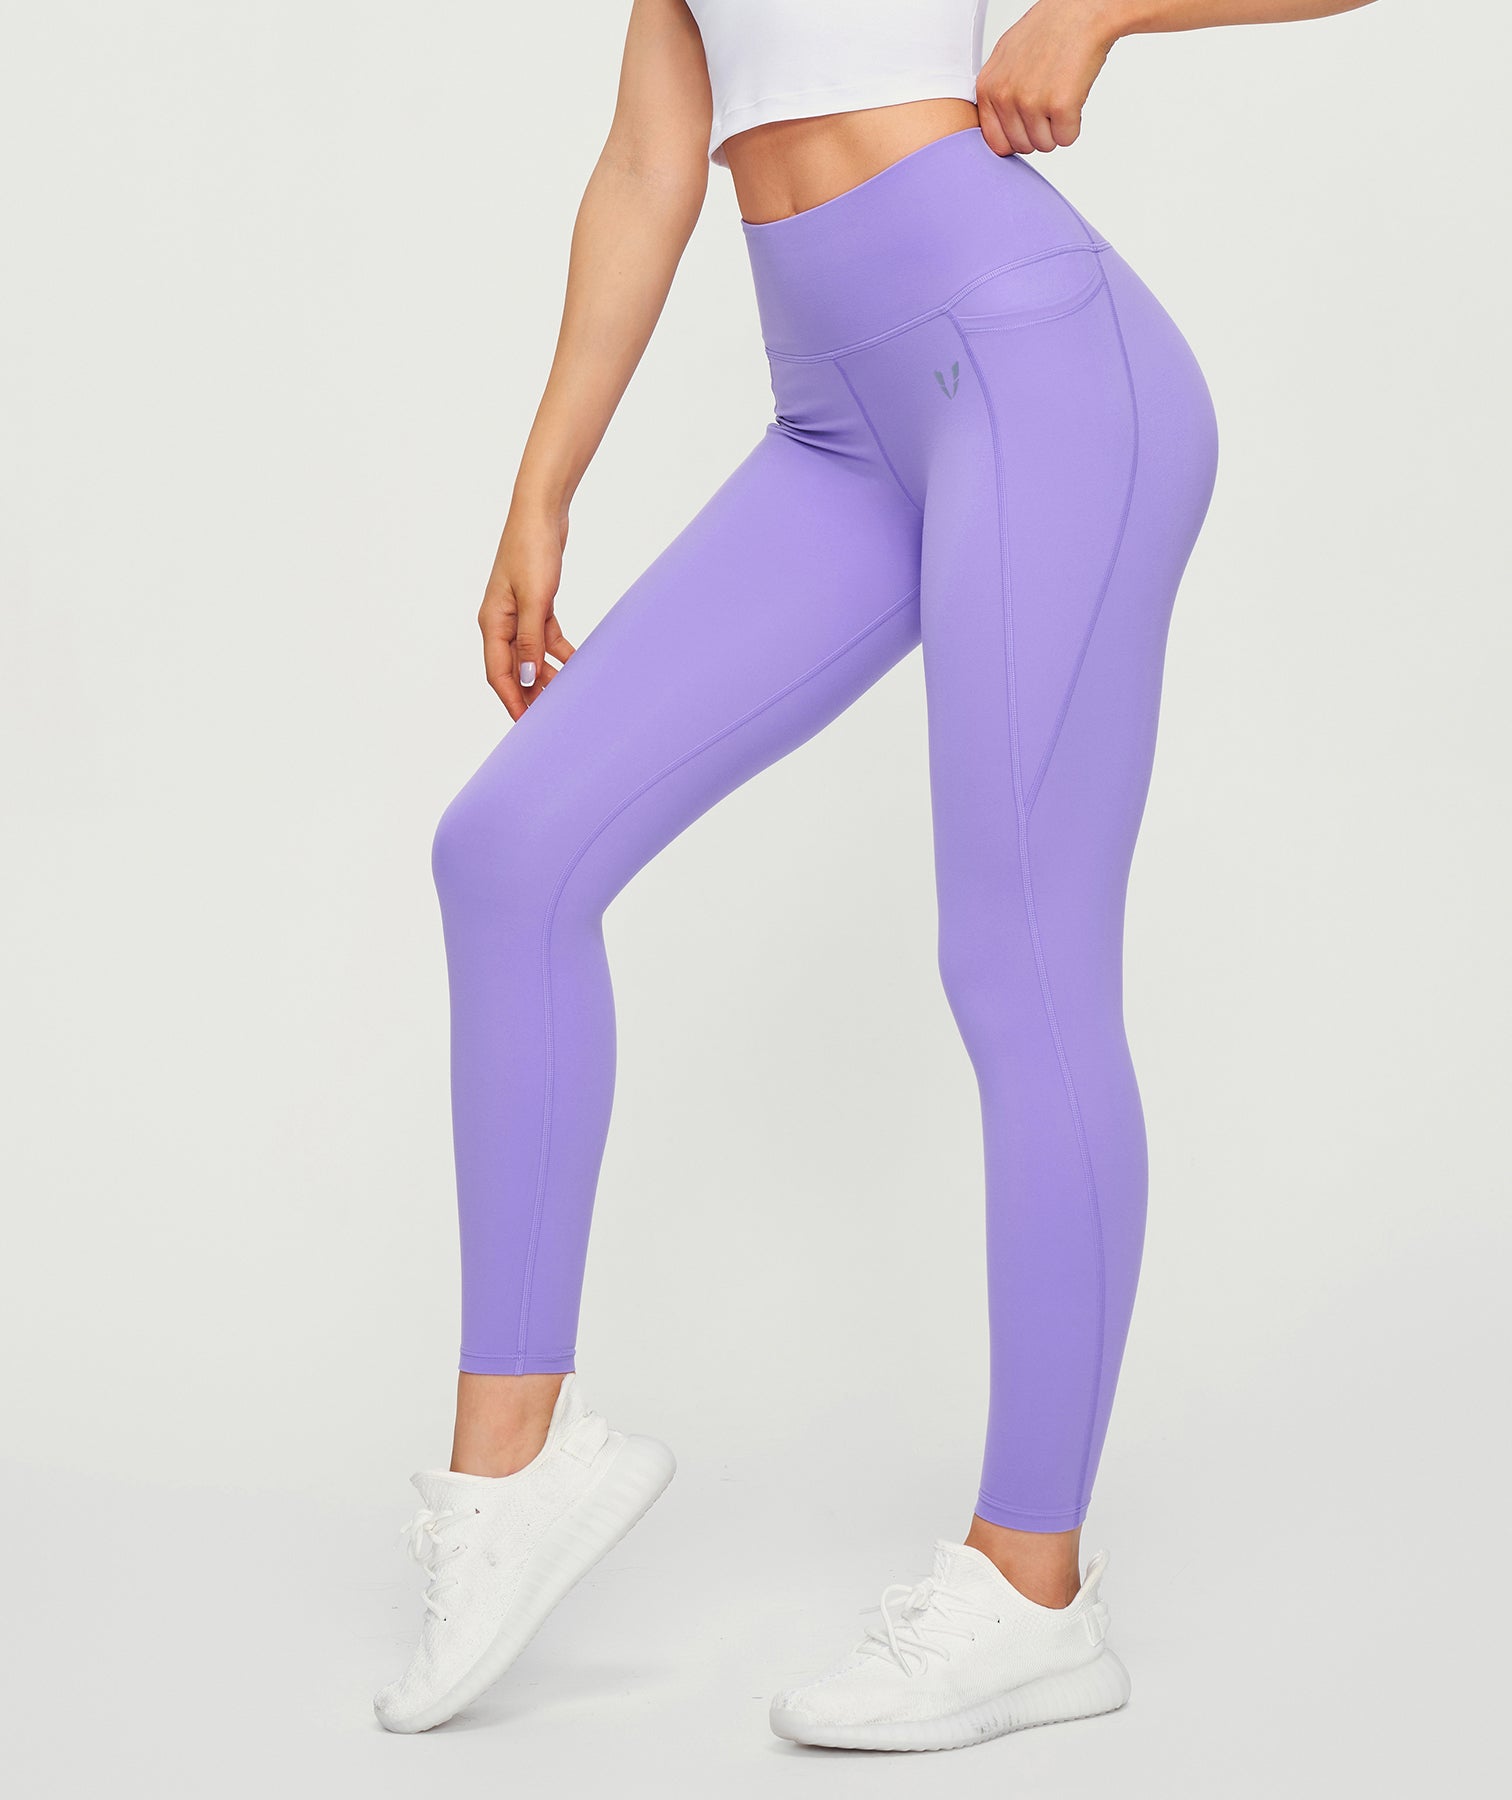 Lineup High-Waist Pocket Legging in Purple